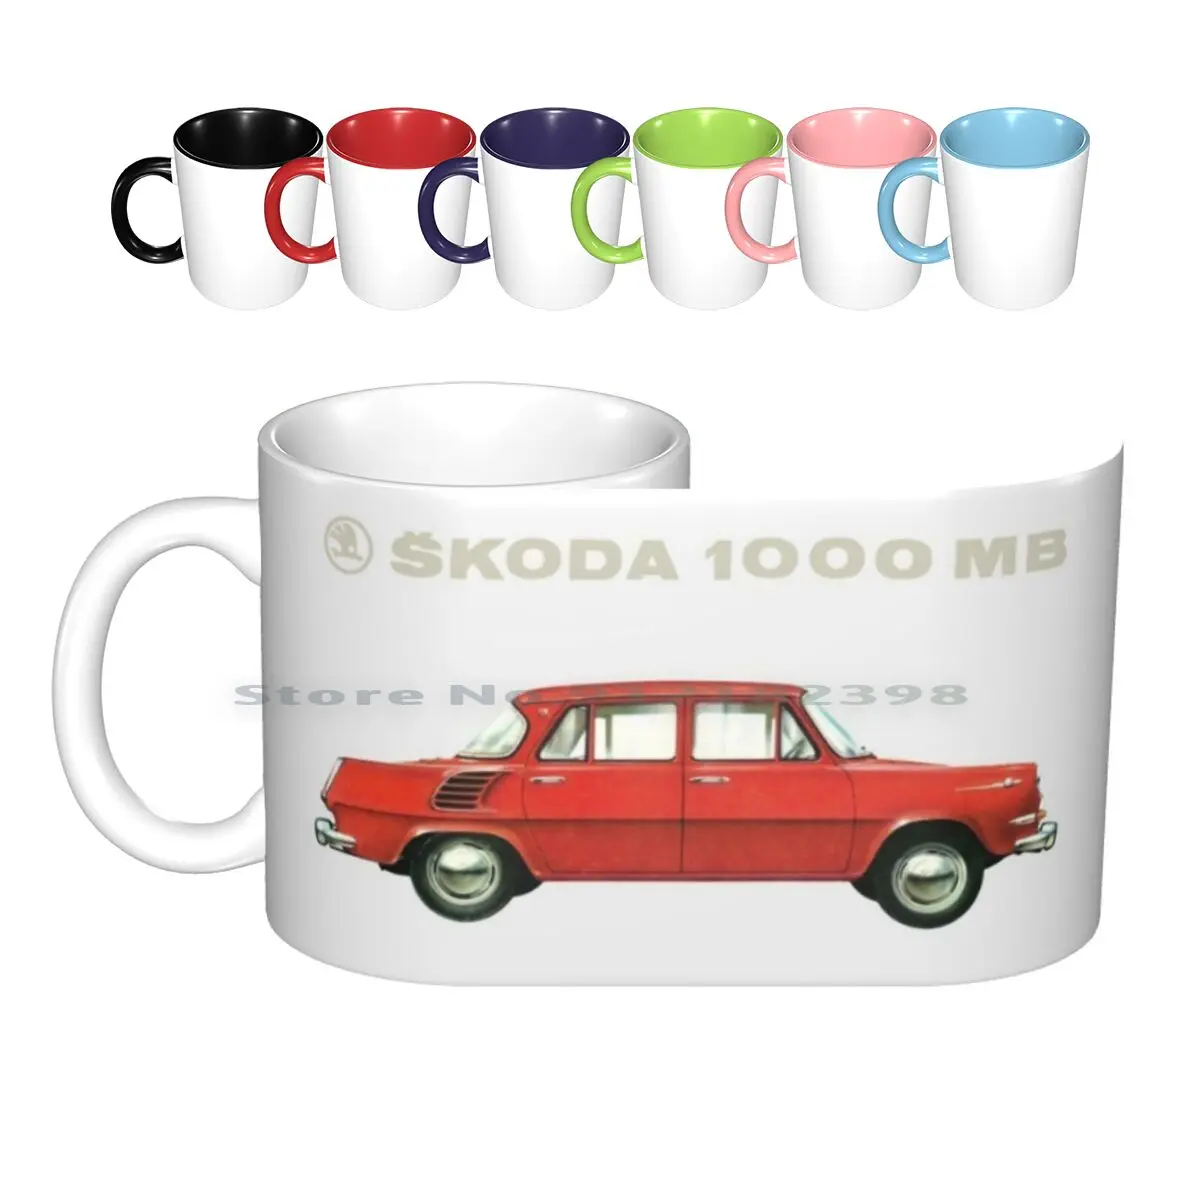 Skoda 1000mb Ceramic Mugs Coffee Cups Milk Tea Mug Skoda Estelle 1000 1000mb Rear Engine Small Family Car Cars Classic Classic